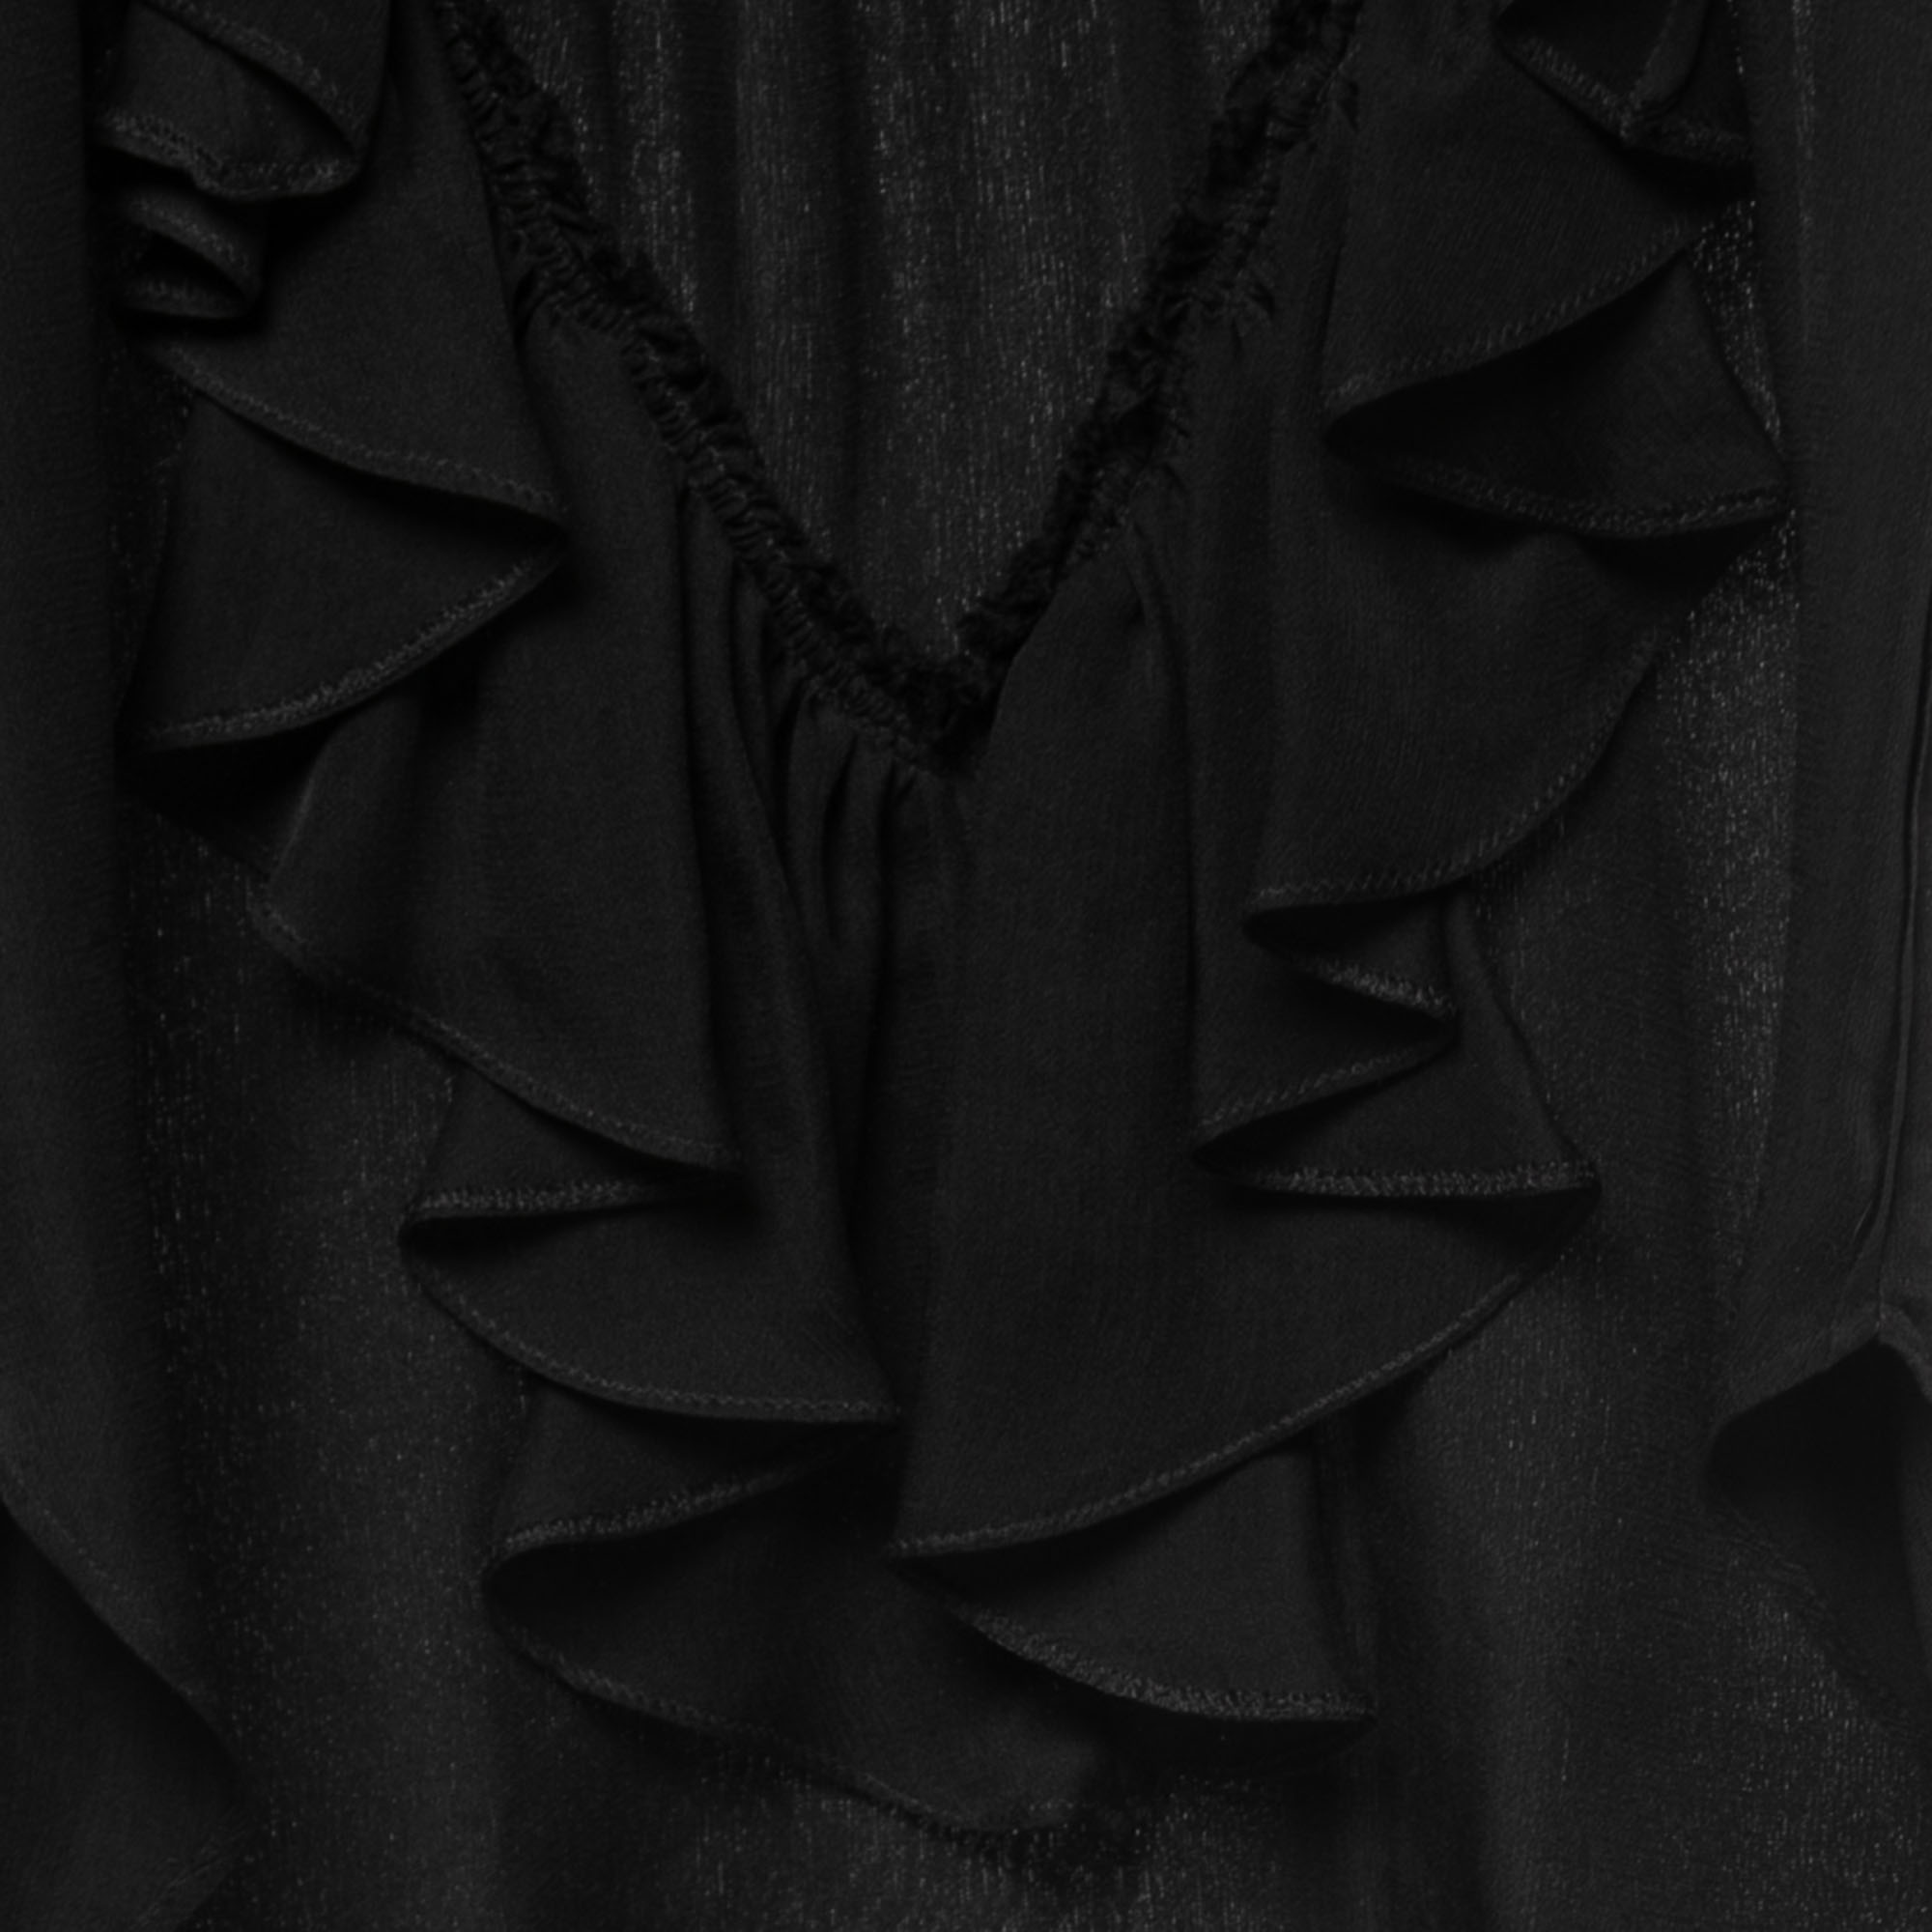 Isabel Marant Black Silk Ruffled Sleeveless Blouse S